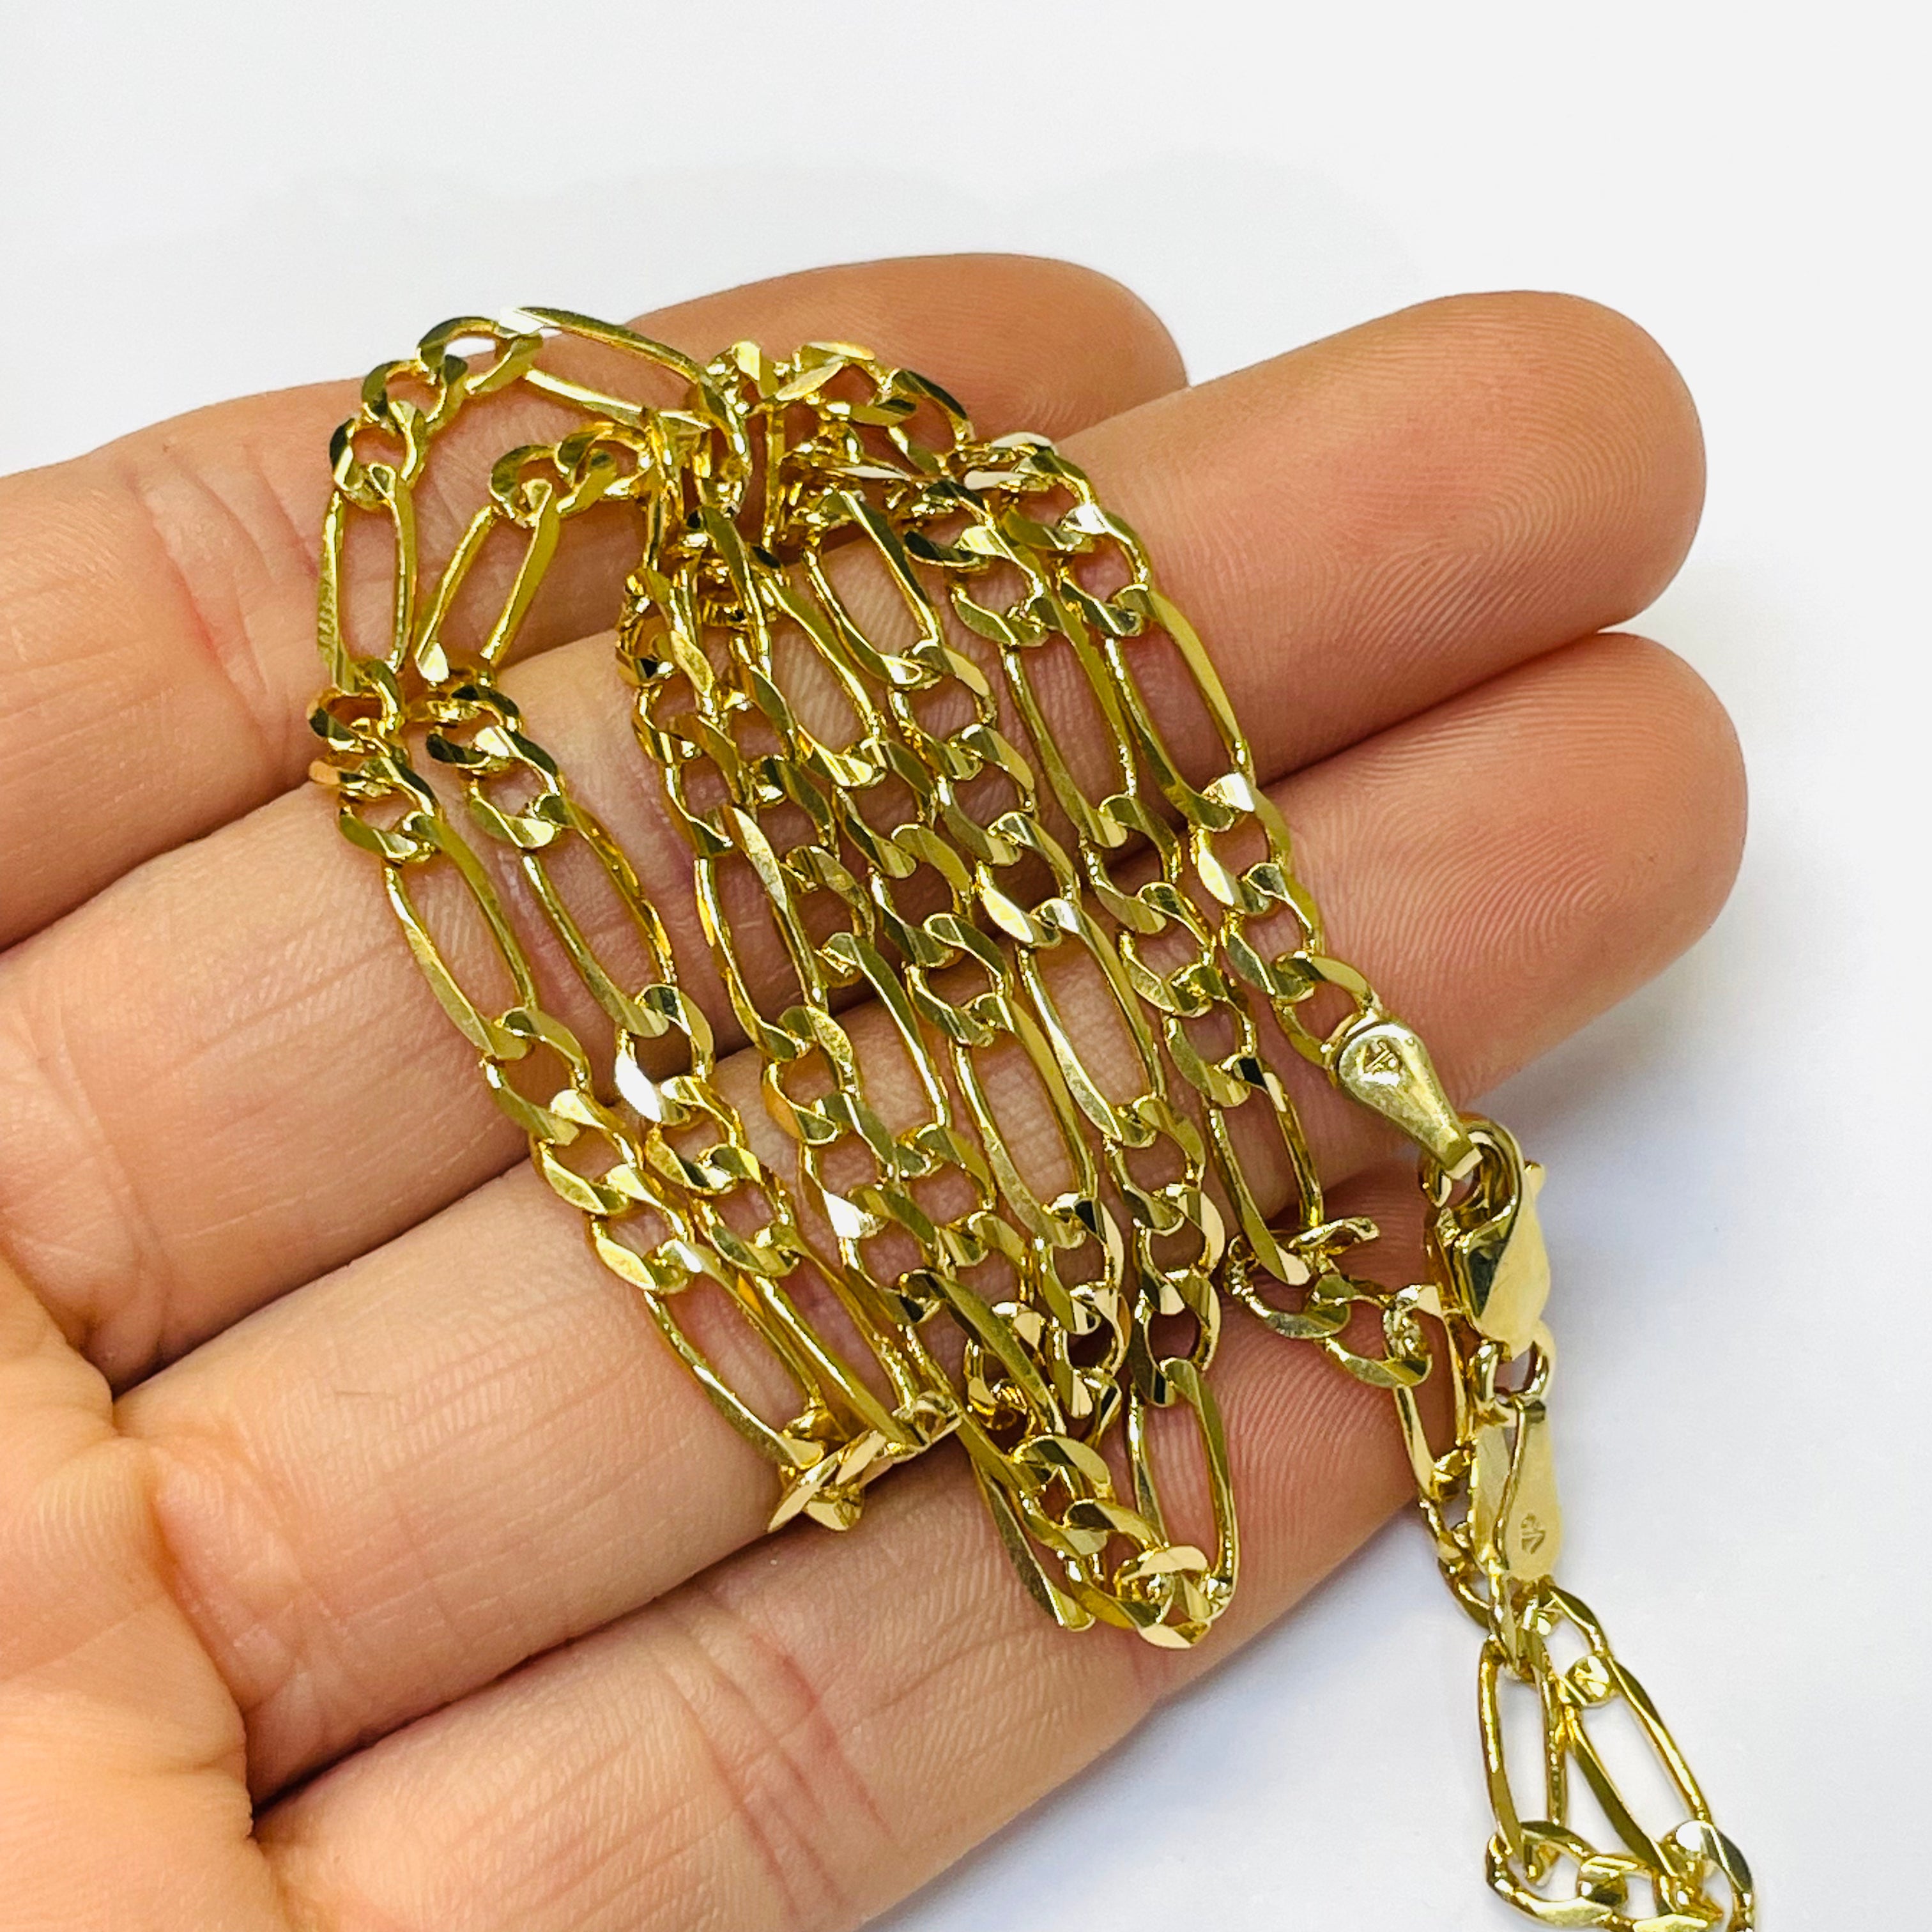 20” 4mm 14K Yellow Gold Figaro Link Chain